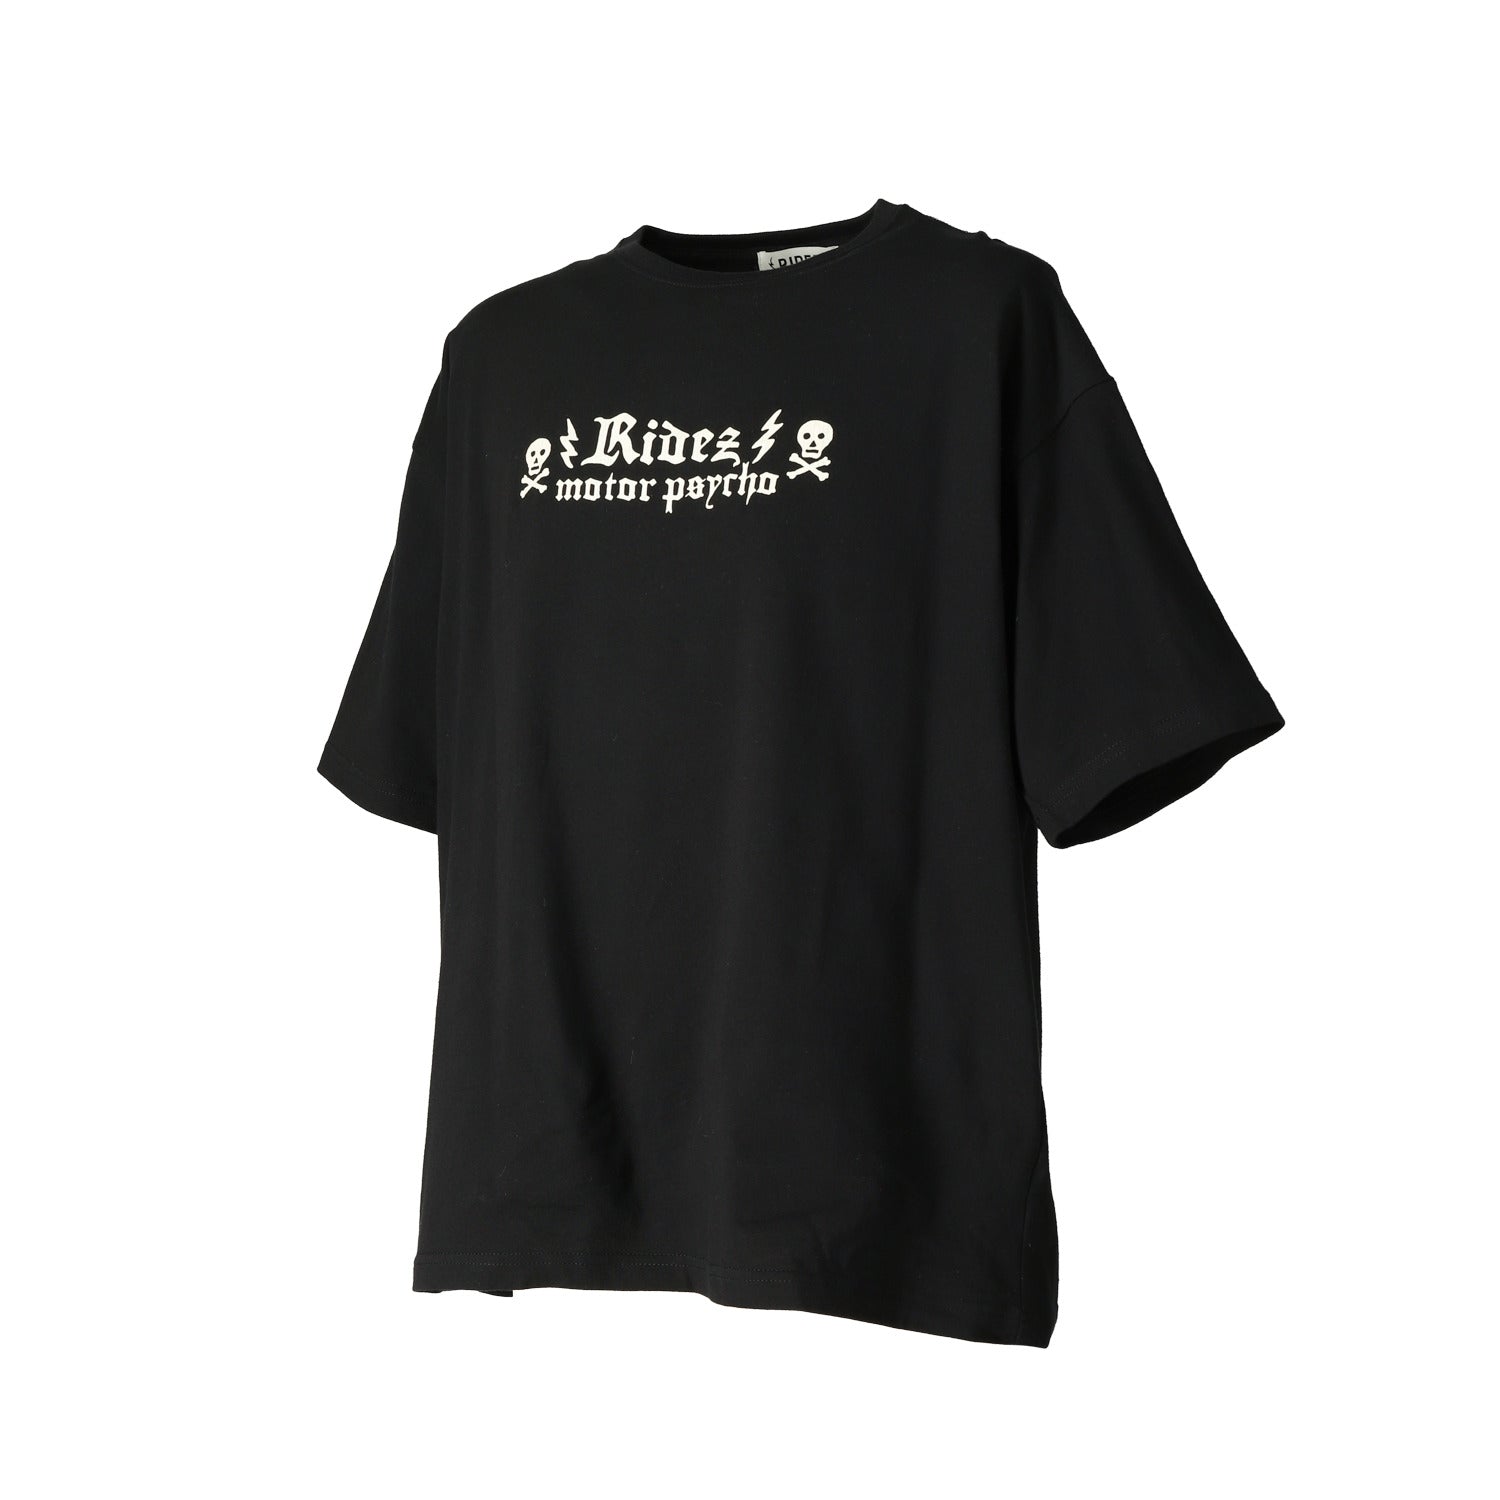 RIDEZ PSYCHO Big Silhouette T-shirt RD7013 